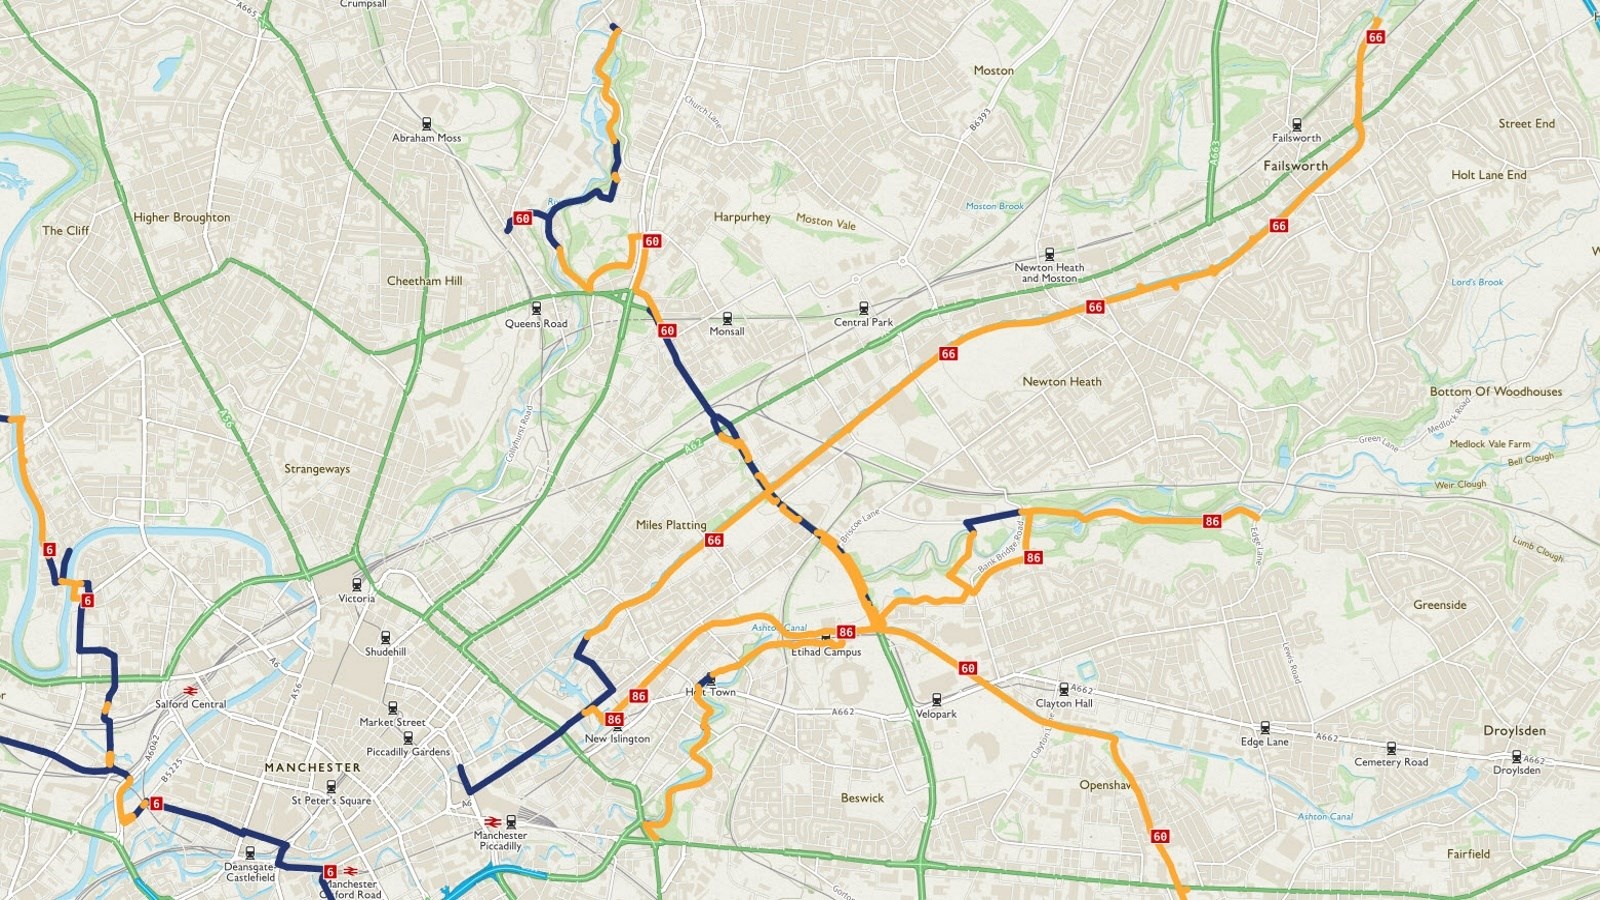 Route 60 - Sustrans.org.uk